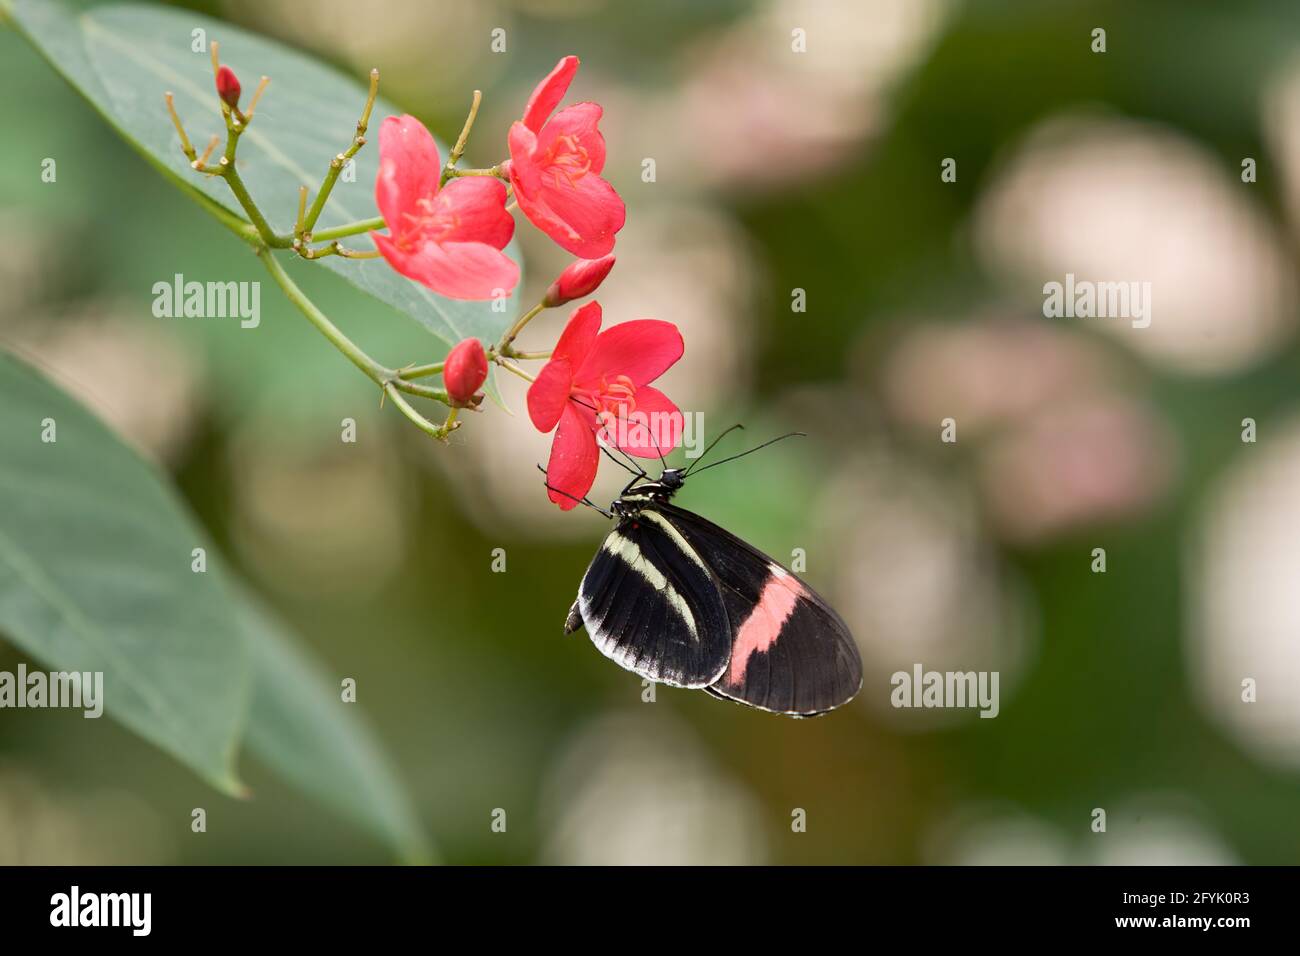 Postman Butterfly, Common Postman, Heliconius melpomene rosina.  This subspecies found in Costa Rica & Panama. Stock Photo